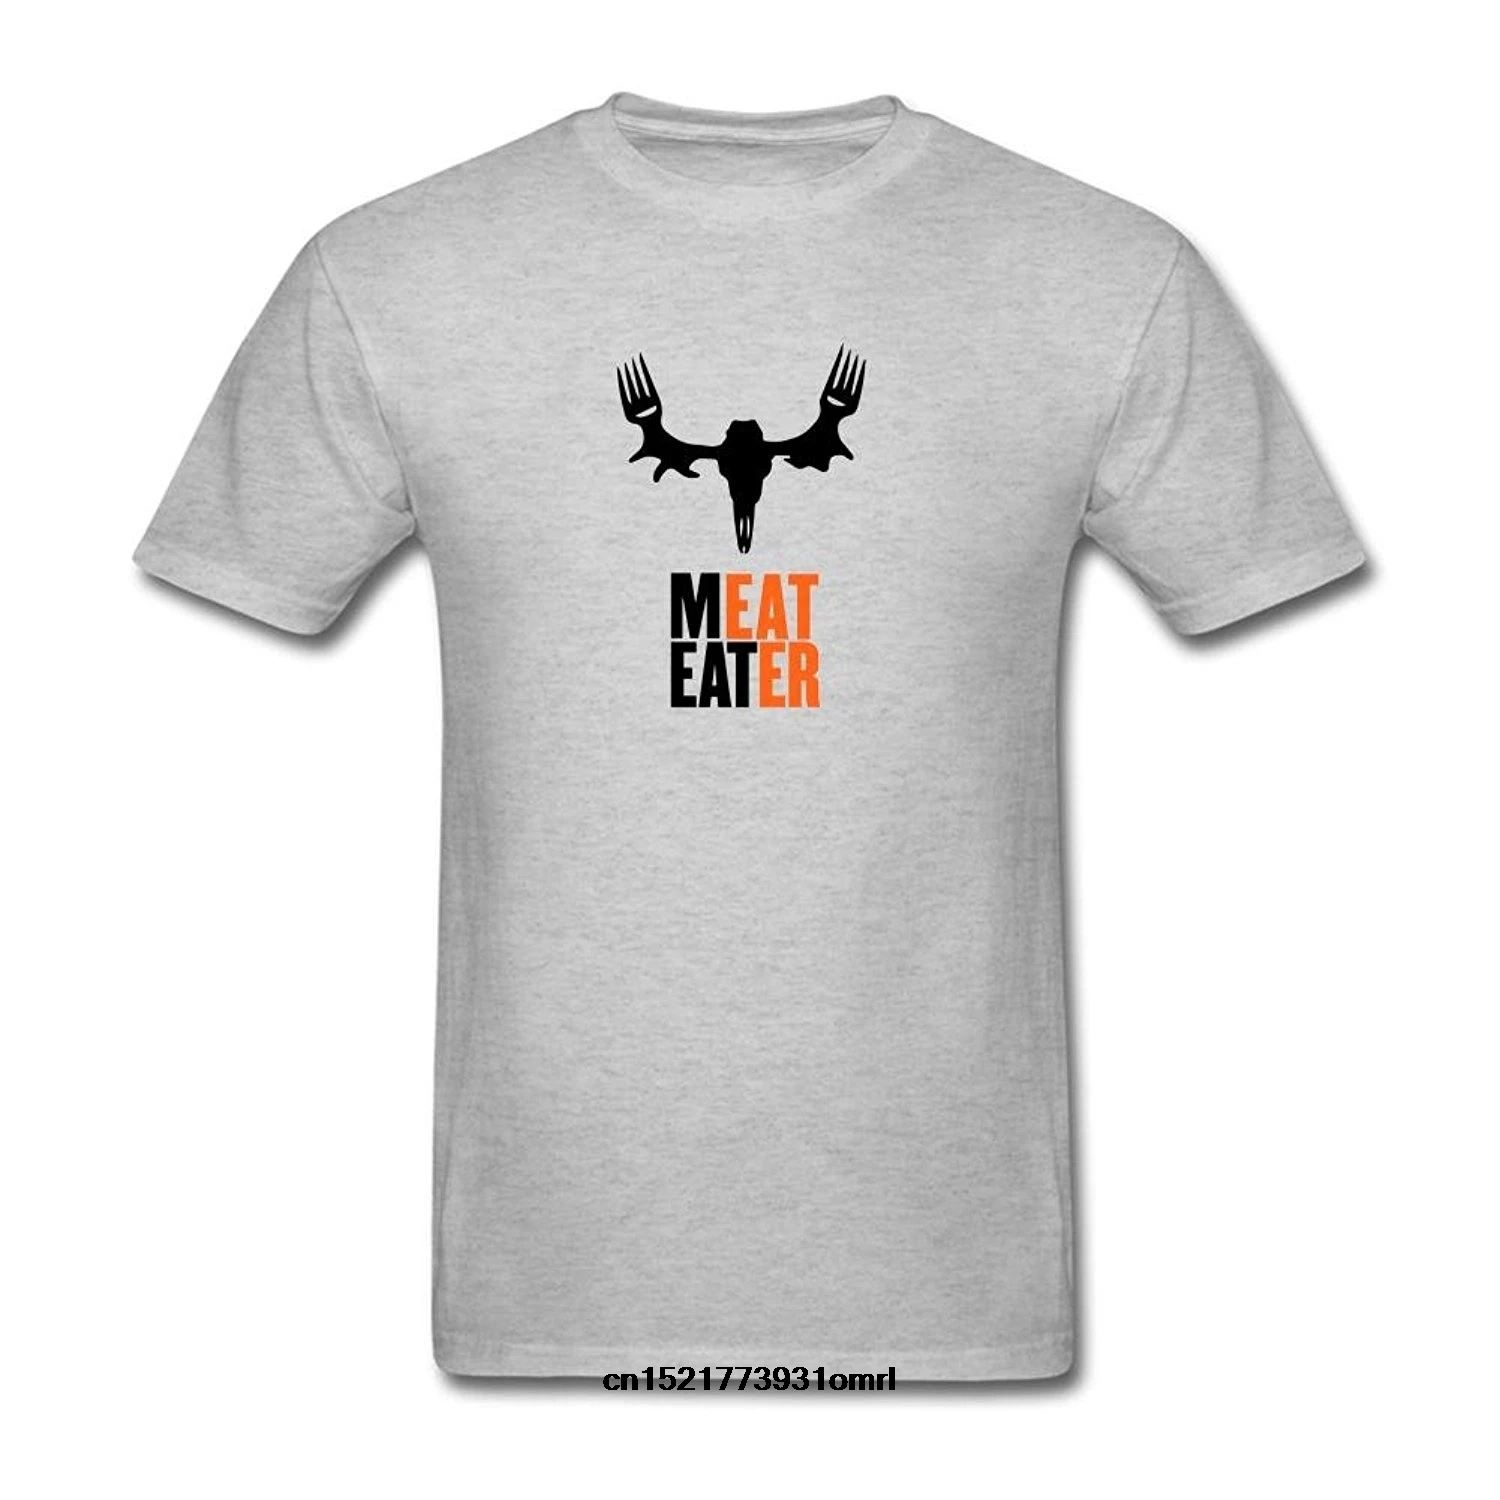 Мужская футболка Toppro Meat Eater с логотипом S ColorName, забавная футбол...